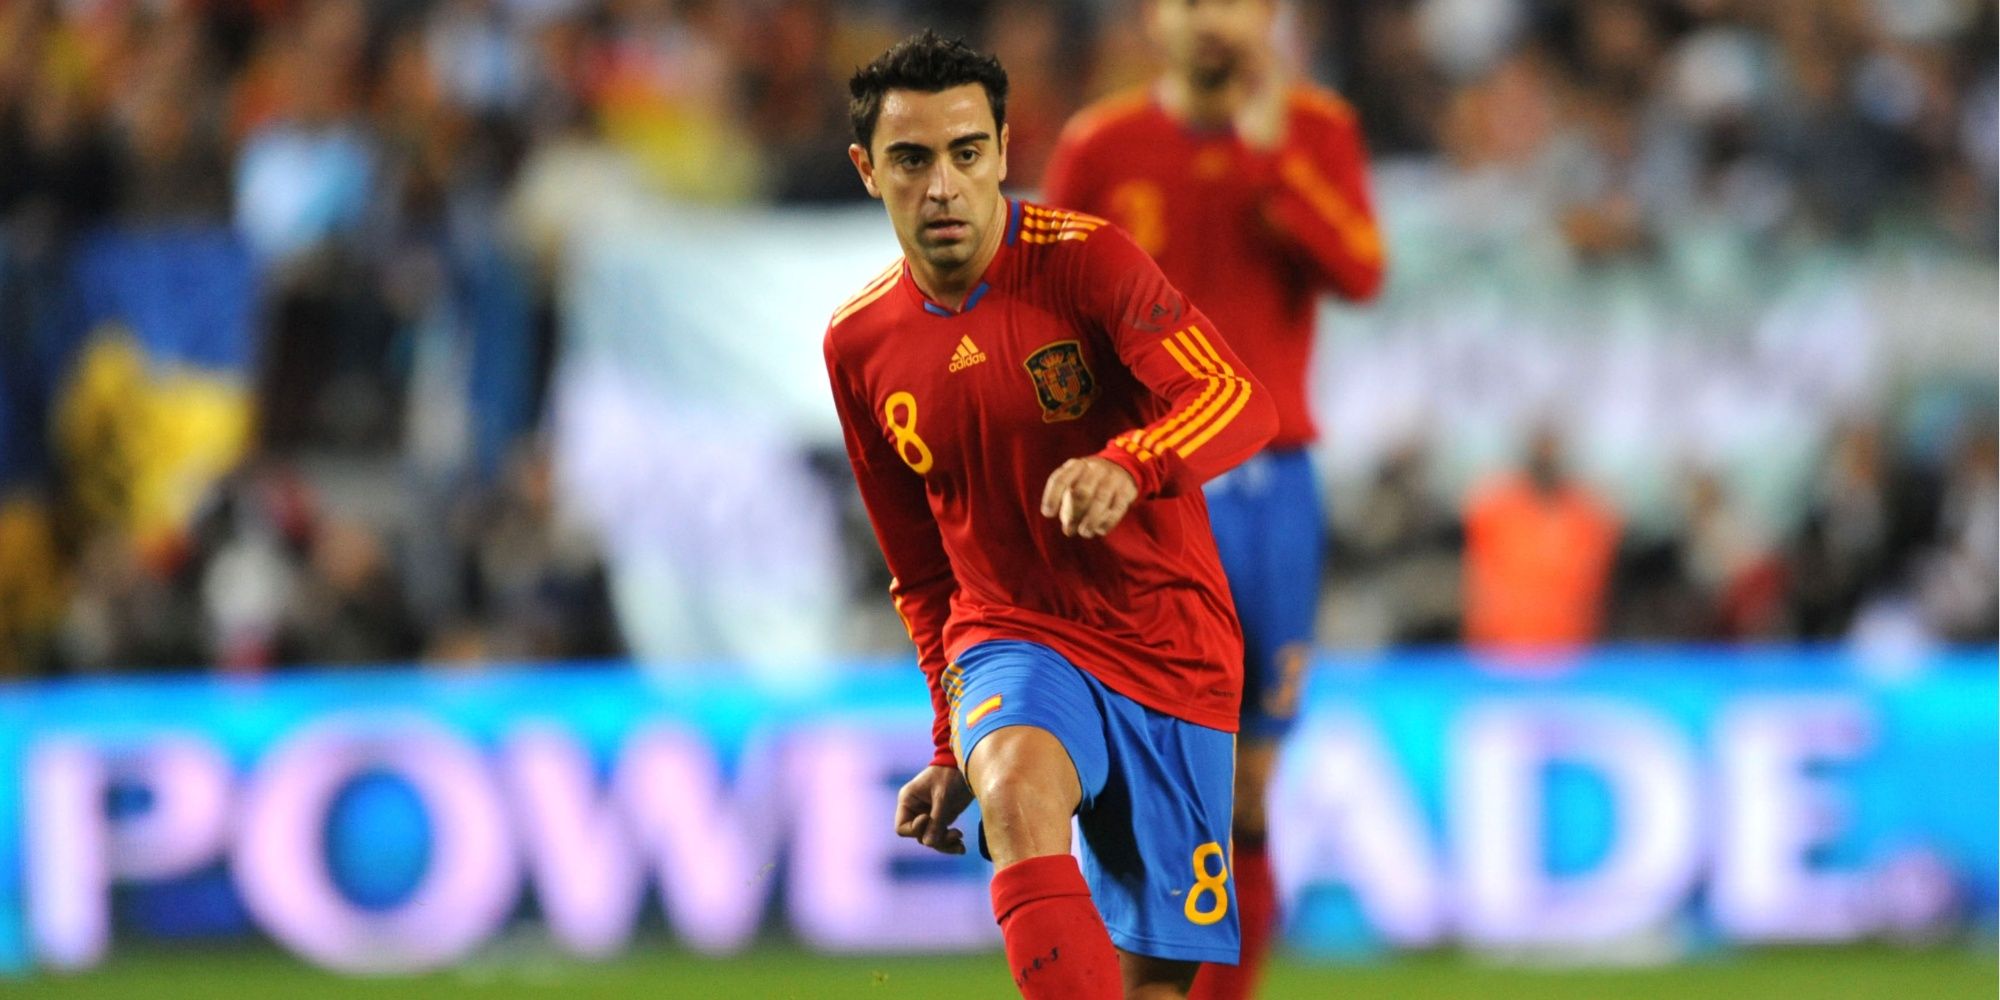 Xavi passing the ball for Spain